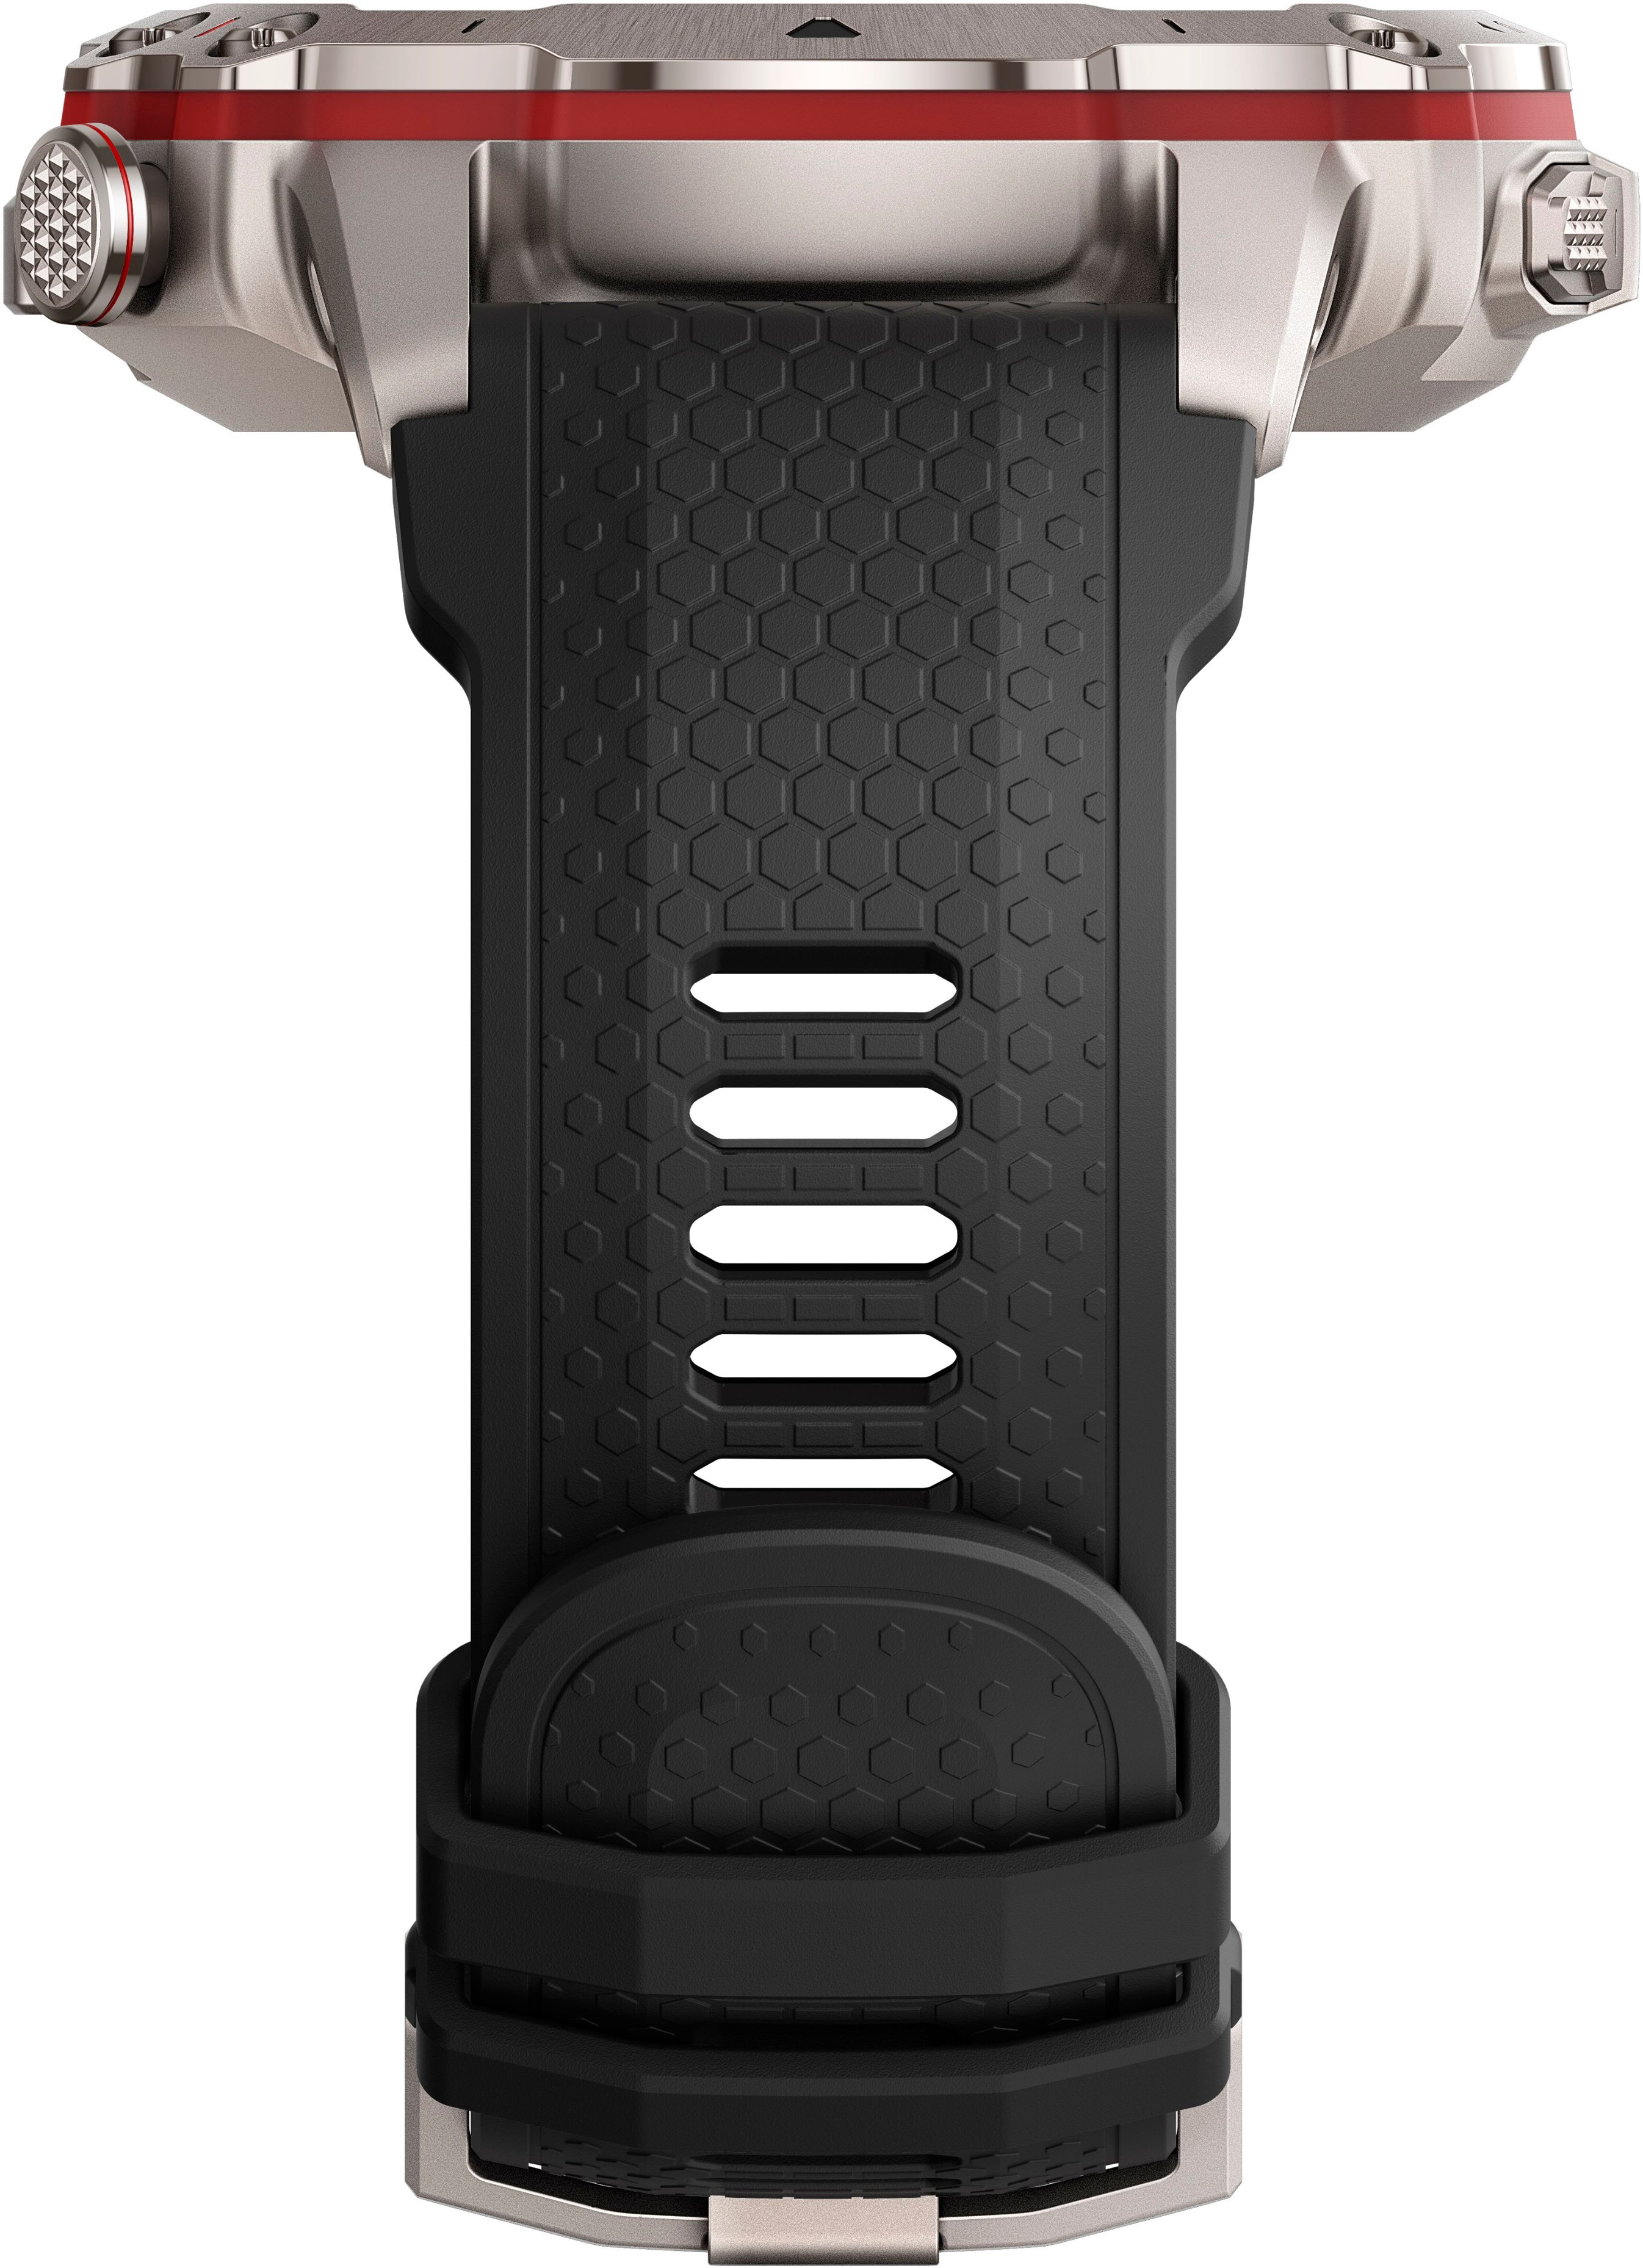 Amazfit Falcon hands-on: The titanium-clad smartwatch is ready for a  premium battle